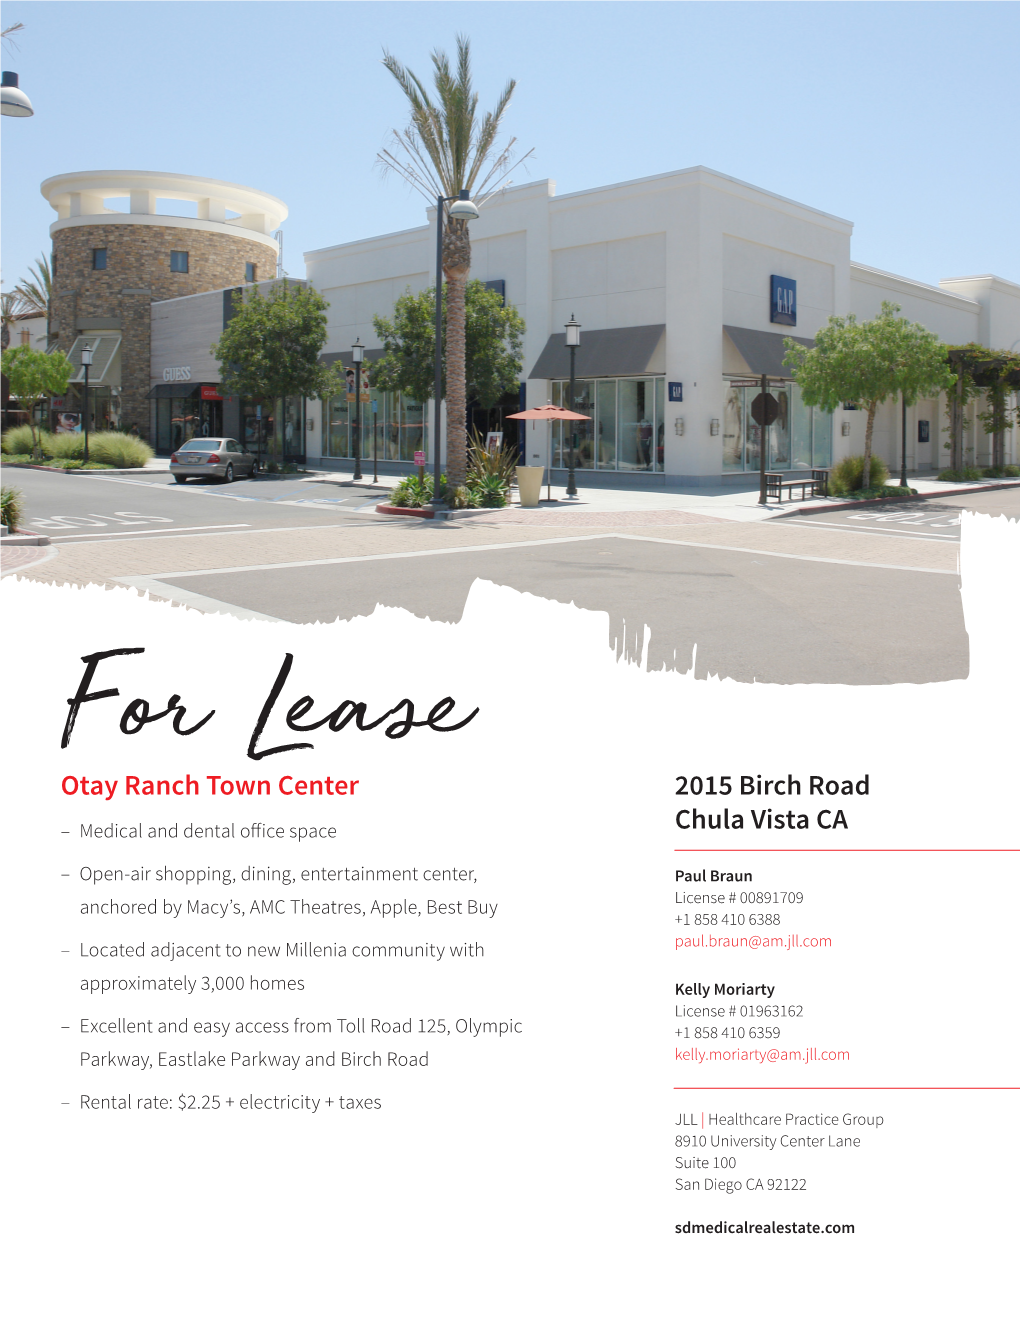 Otay Ranch Town Center 2015 Birch Road Chula Vista CA